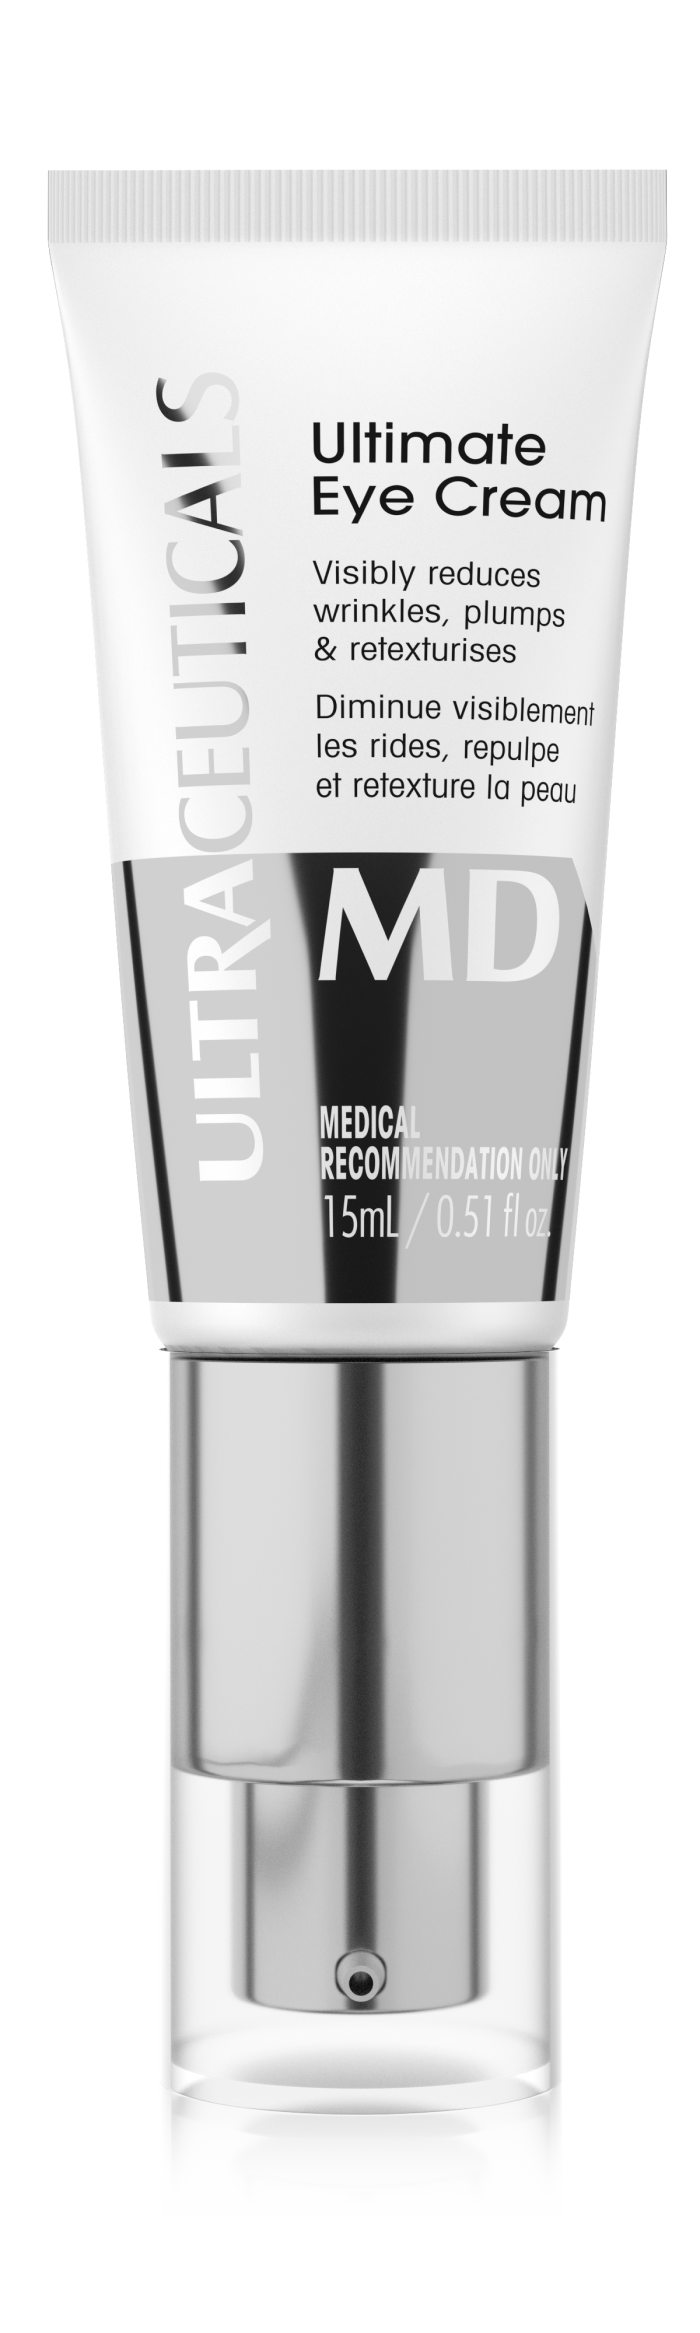 ULTRA Ultimate Eye Cream MD / Крем для кожи вокруг глаз MD, 15 мл